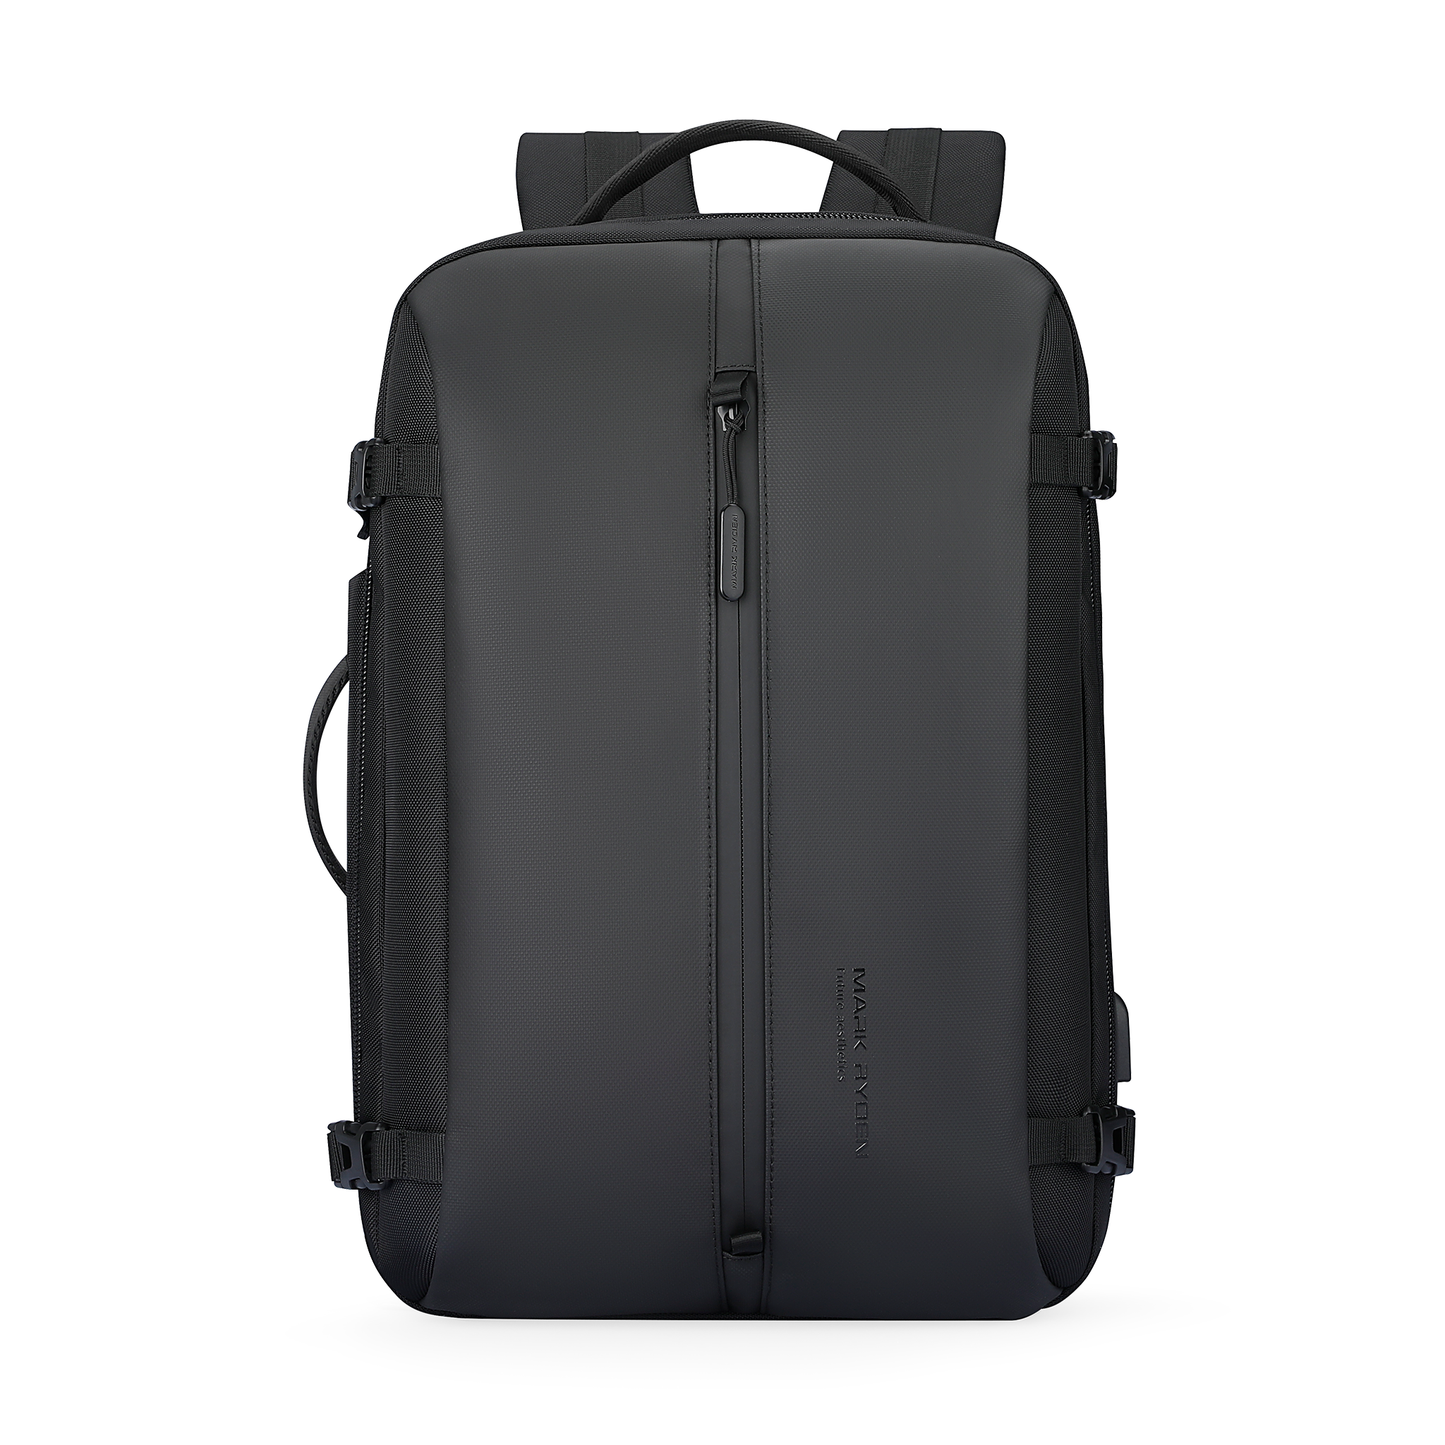 Mochila: Compact High-Capacity, & Smart USB Laptop Backpack